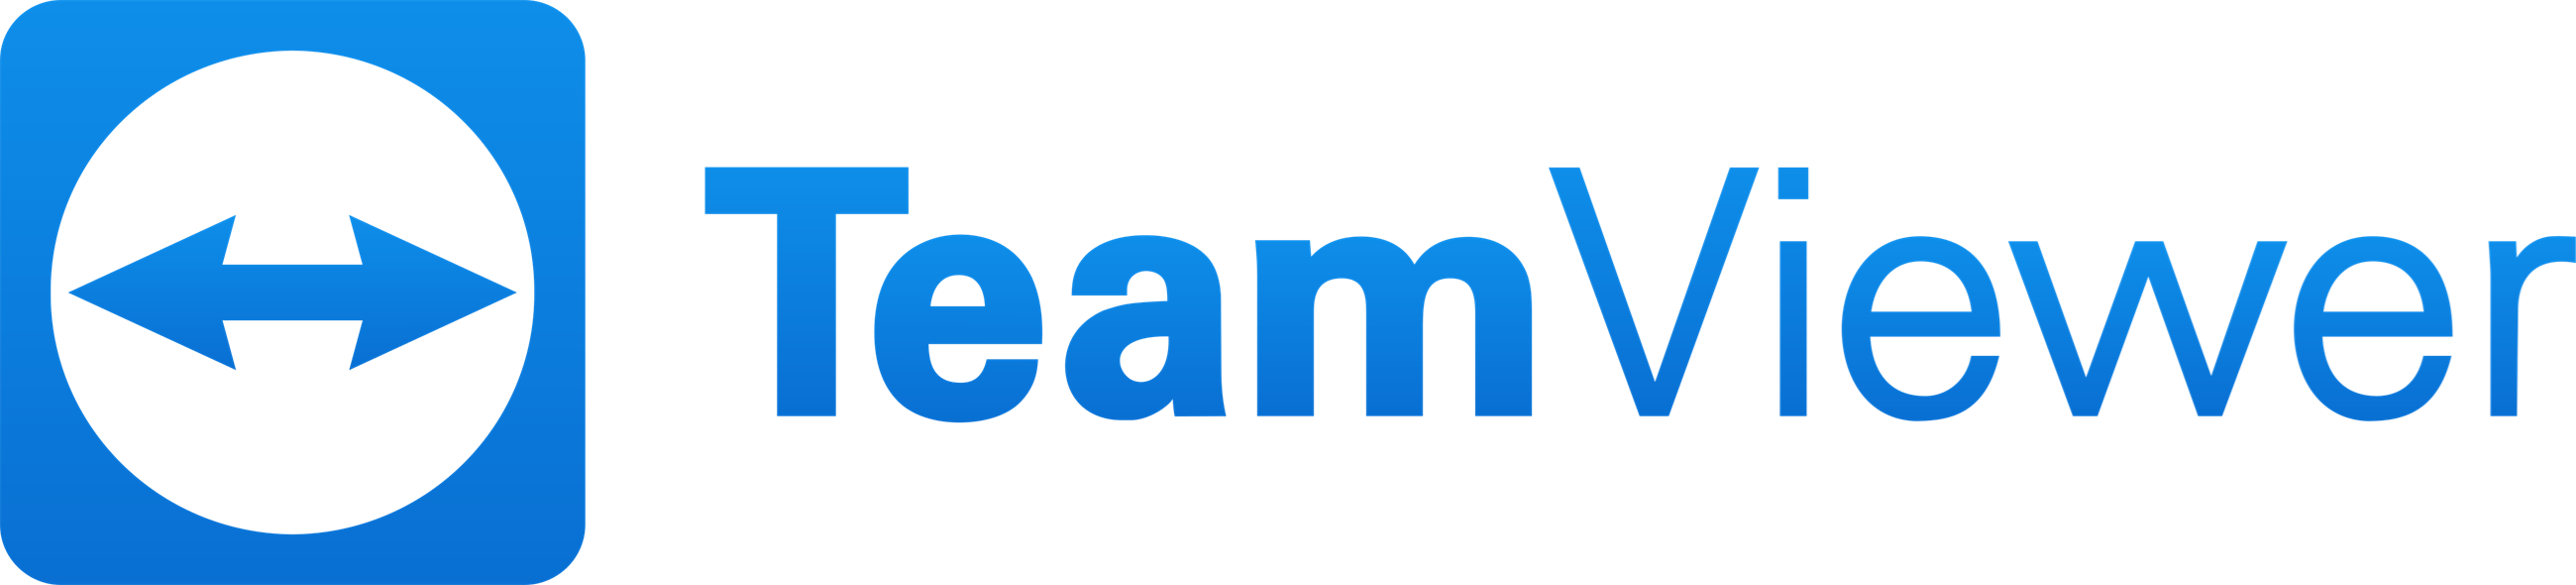 teamviewer_logo.svg_